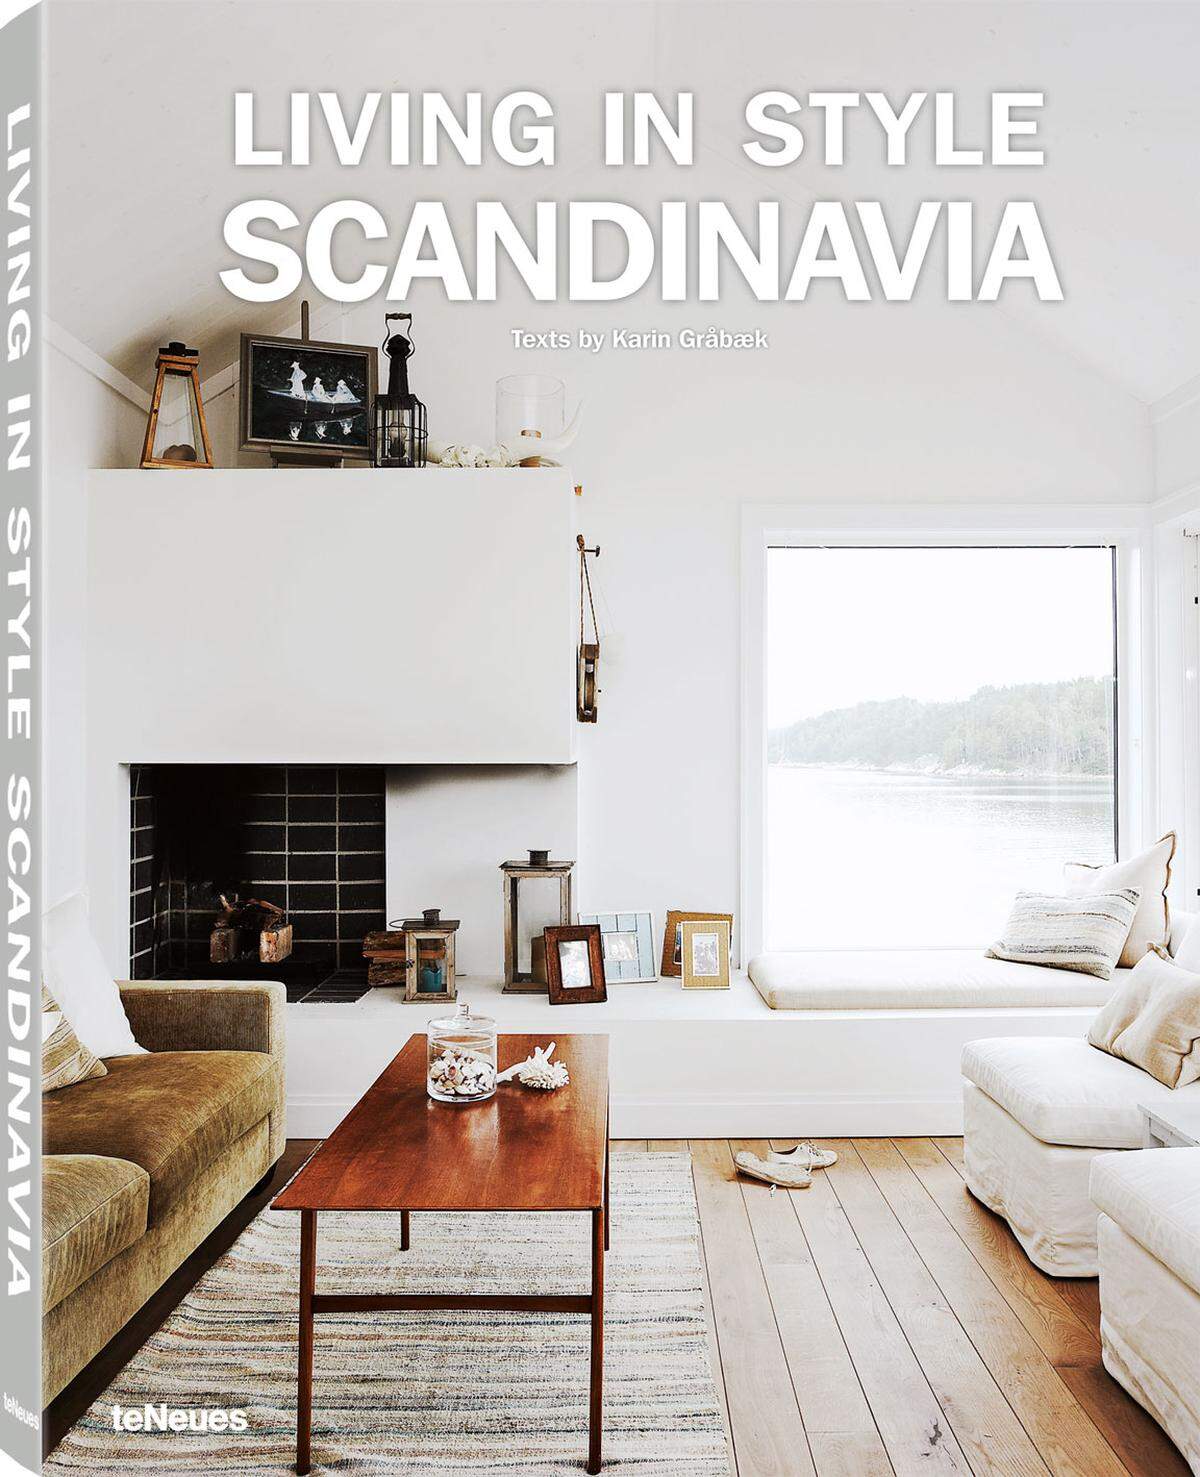 Living in Style. Scandinavia. 208 Seiten, € 49,90, erschienen bei TeNeues